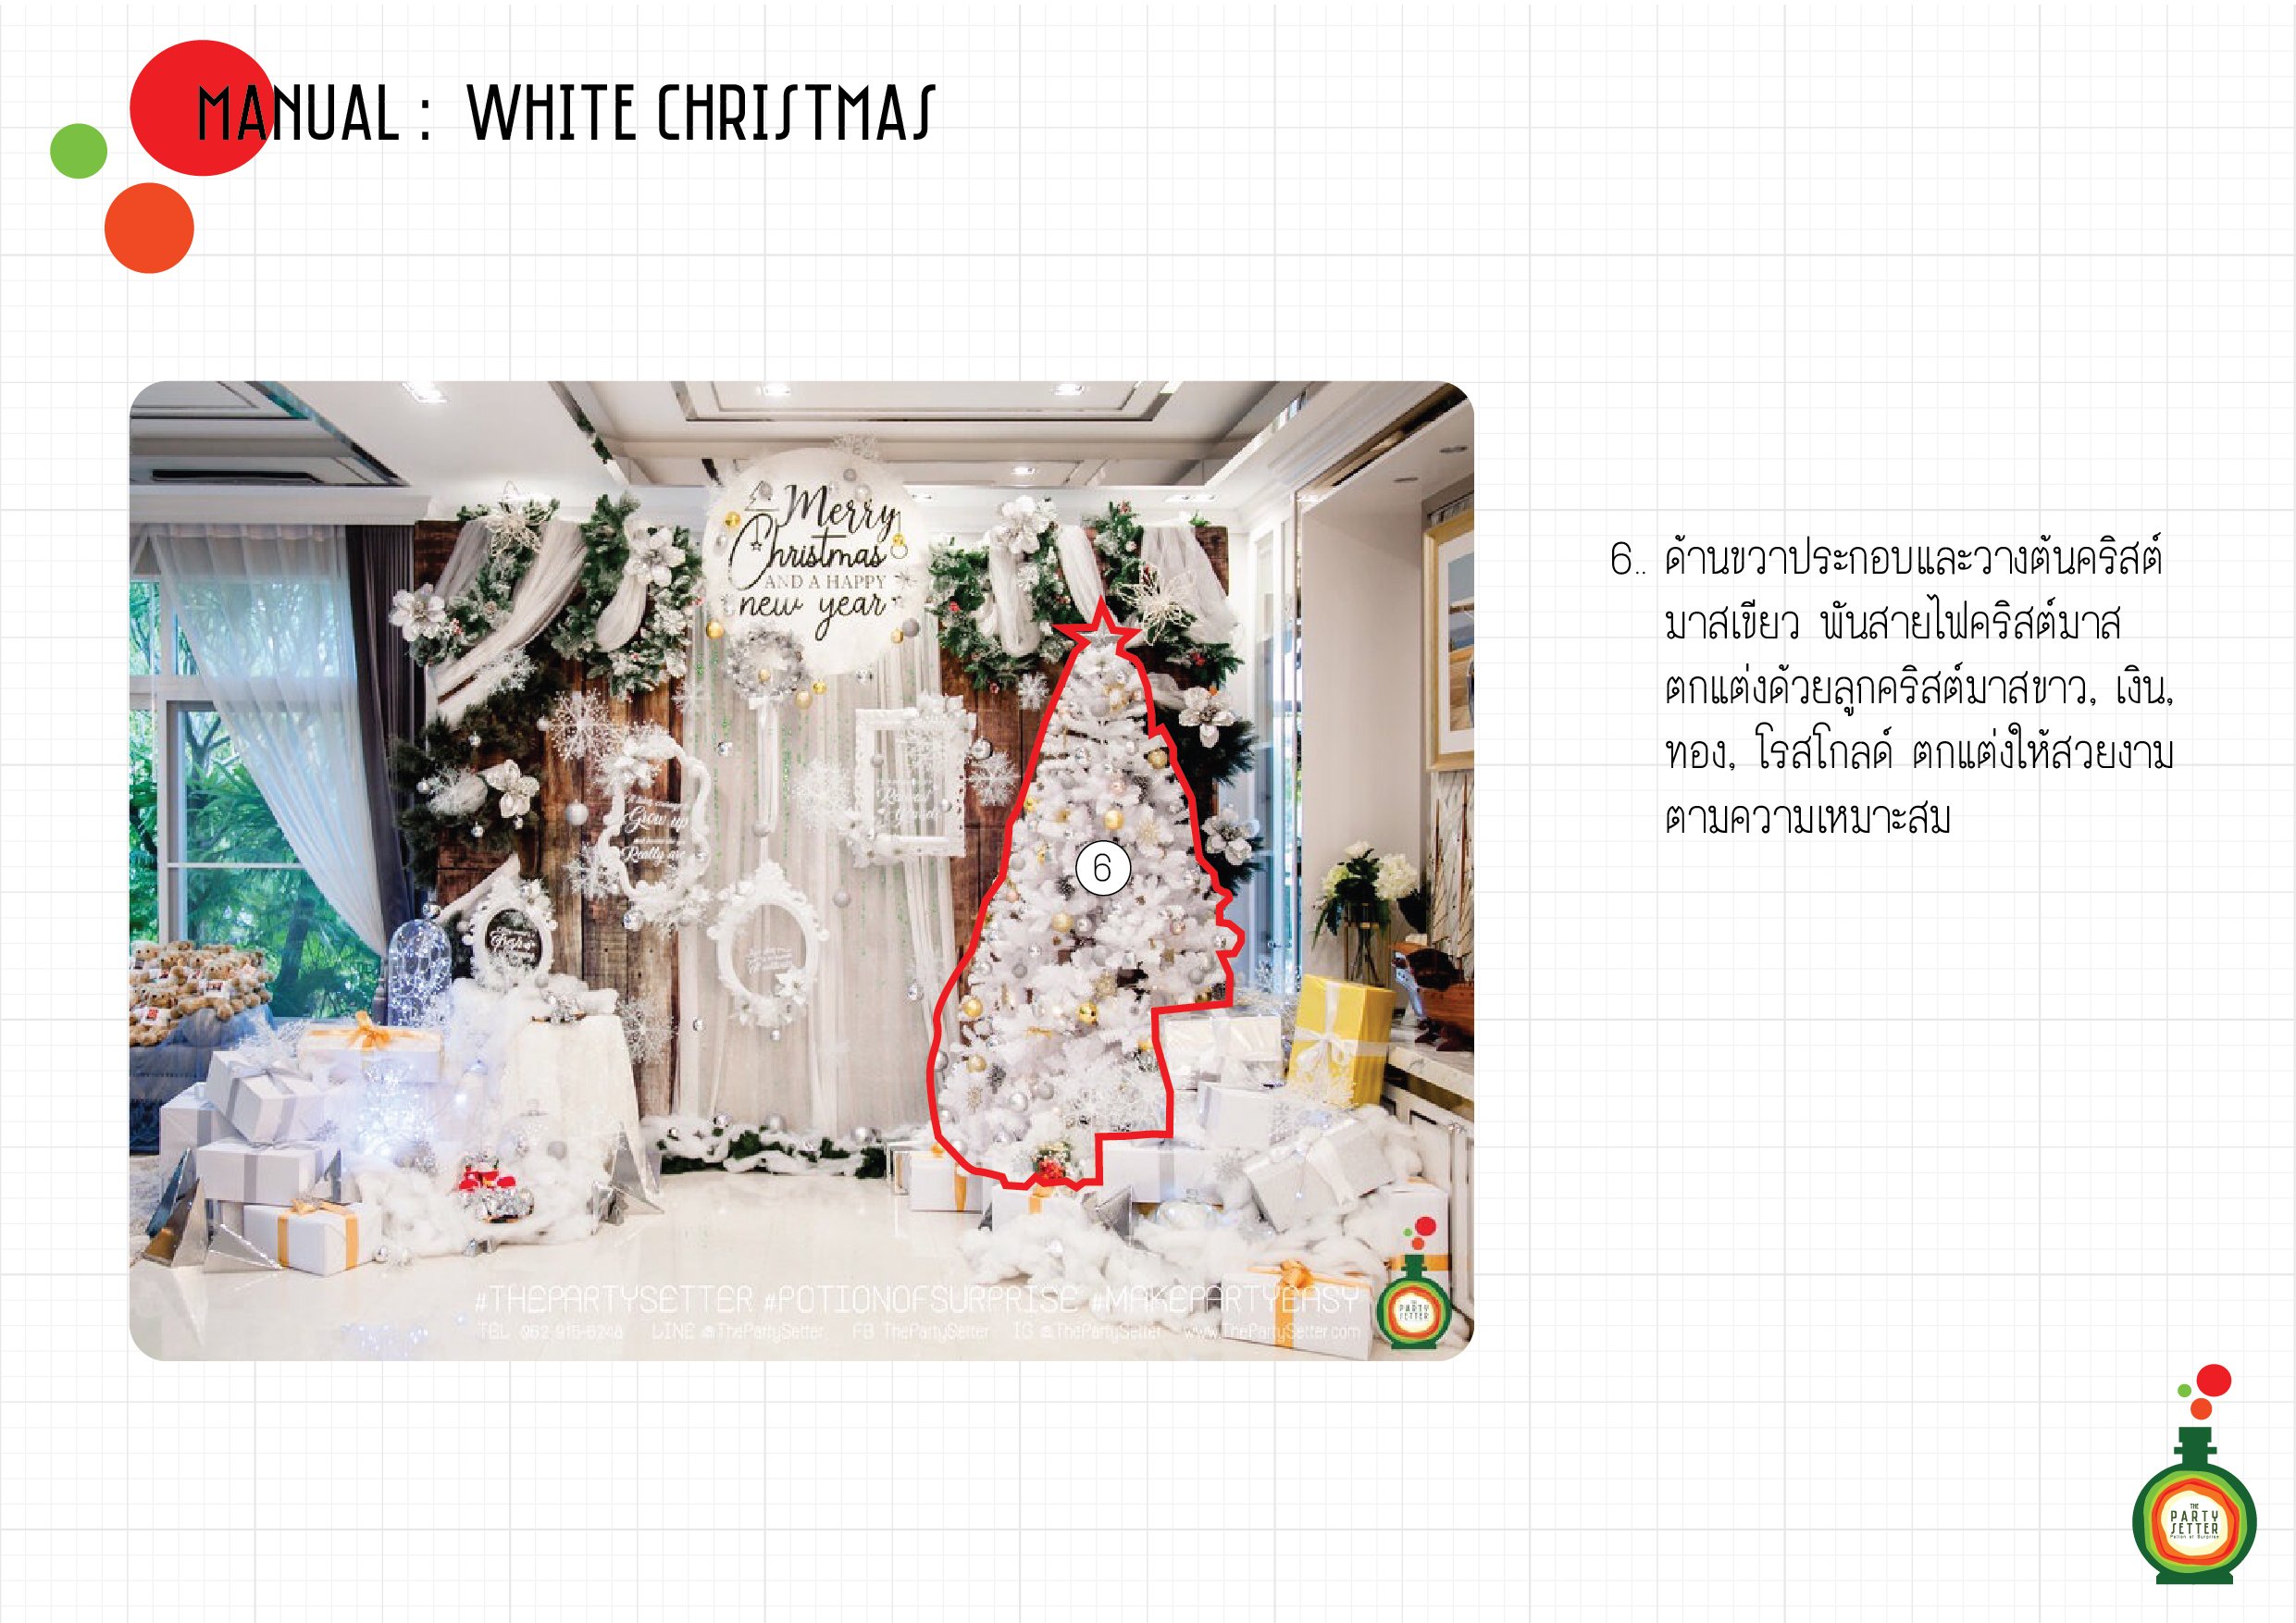 Manual_White Christmas-06-01.jpg